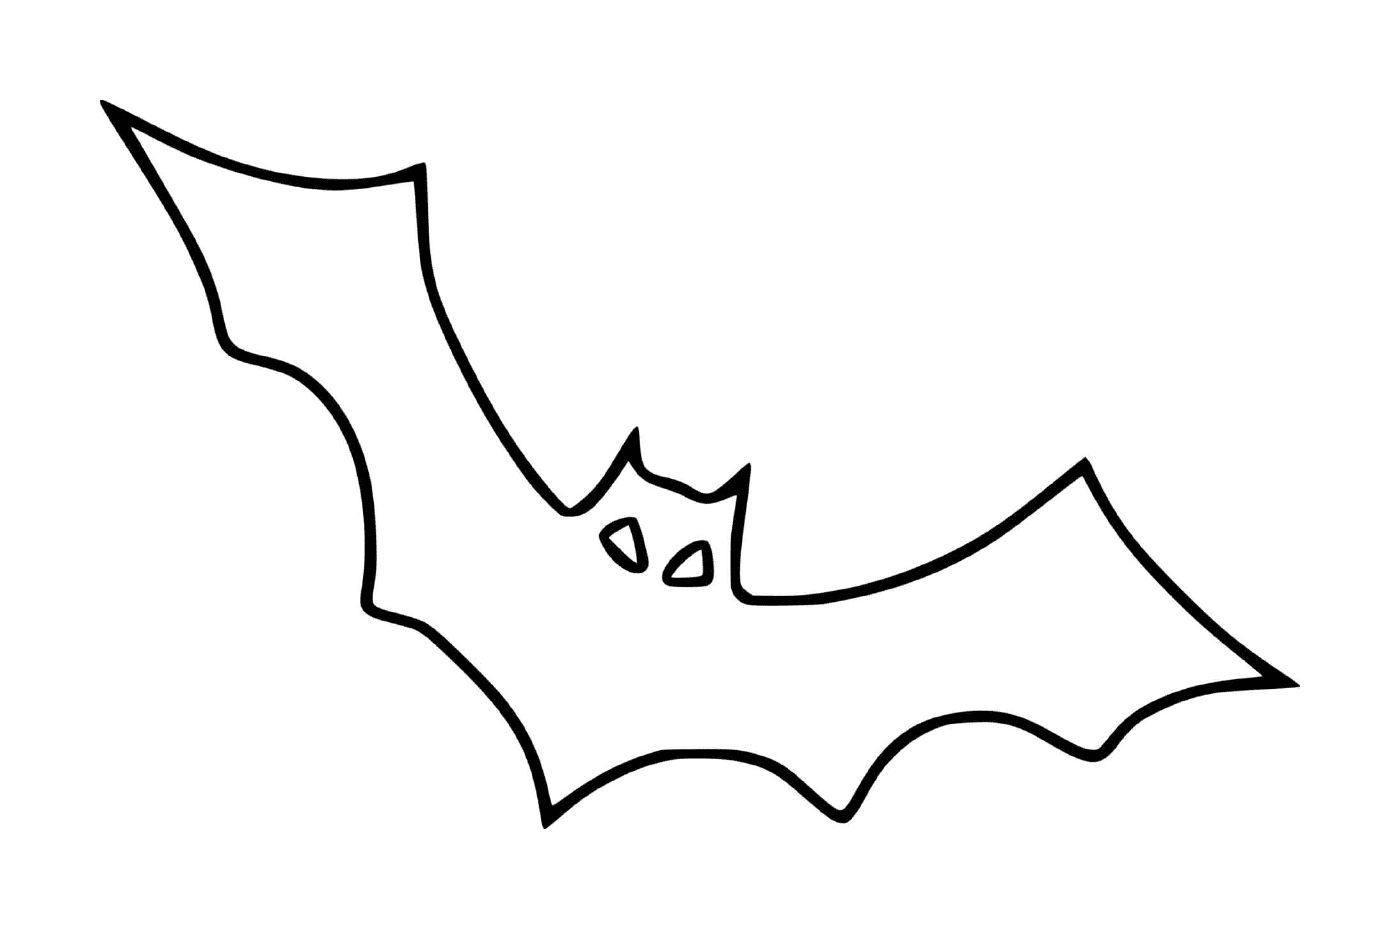  Batman batmanCity name (optional, probably does not need a translation) 